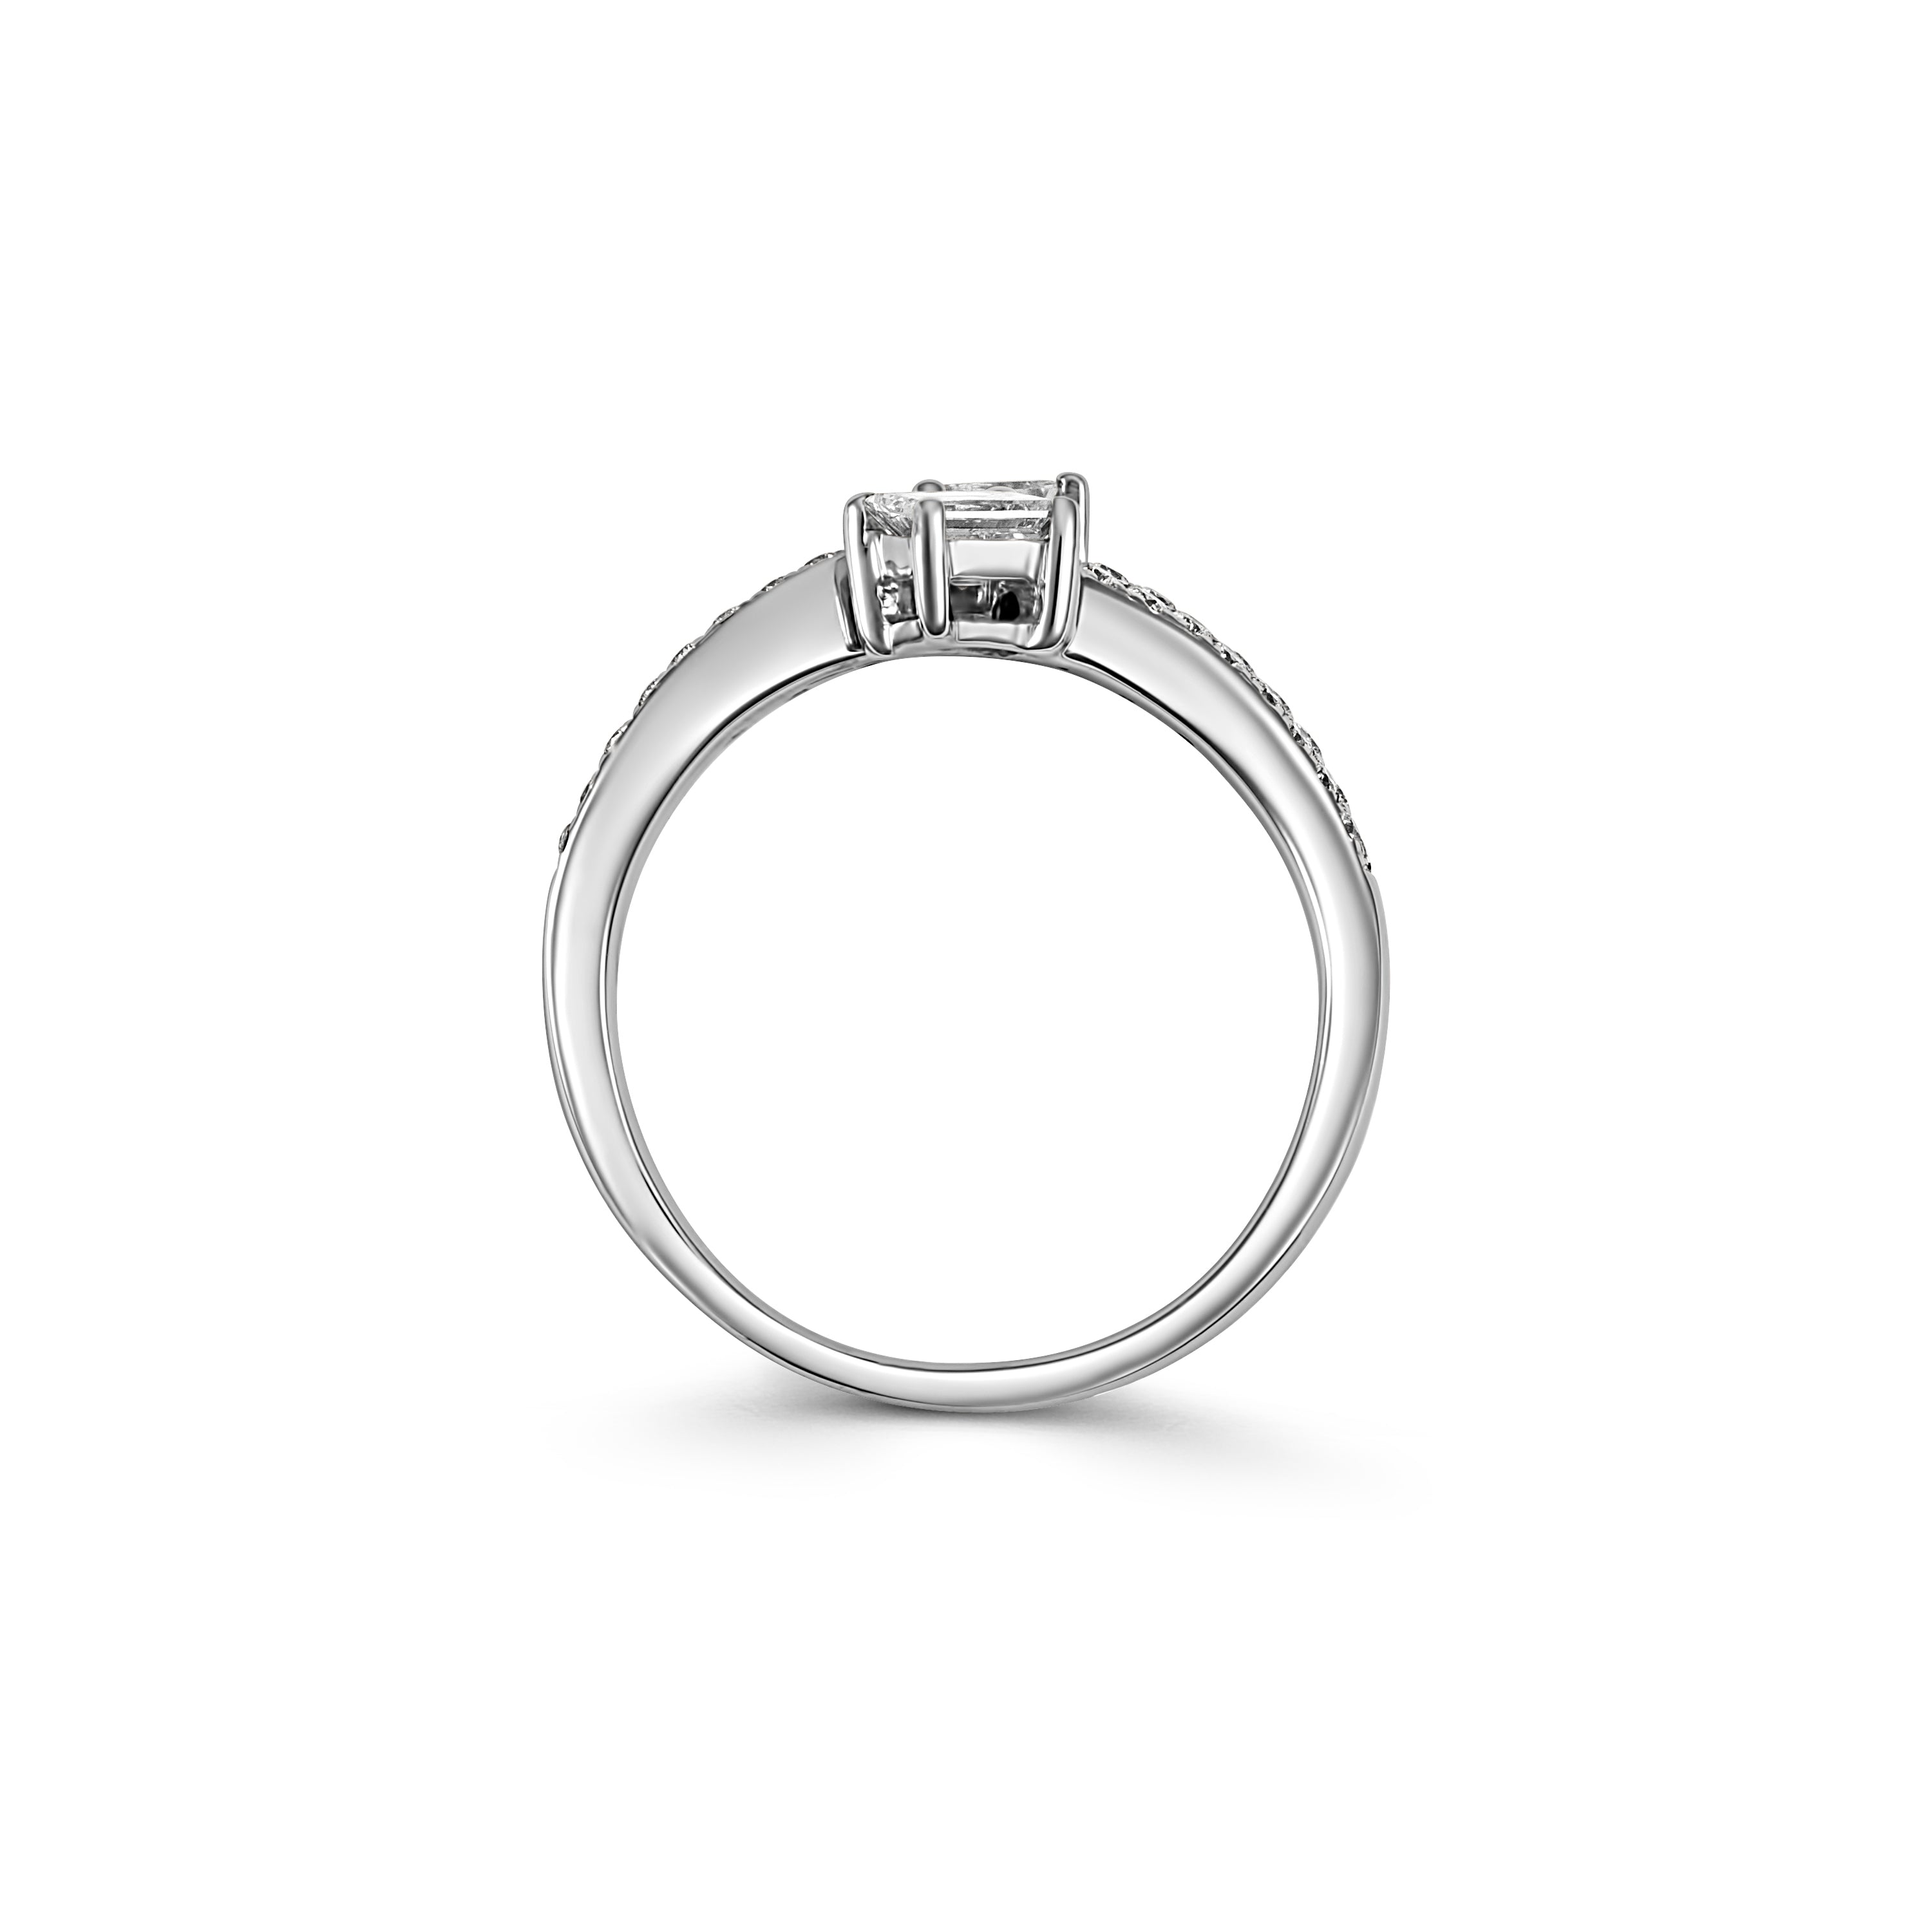 18ct White Gold Two Baguette Diamond Ring - Robert Anthony Jewellers, Edinburgh